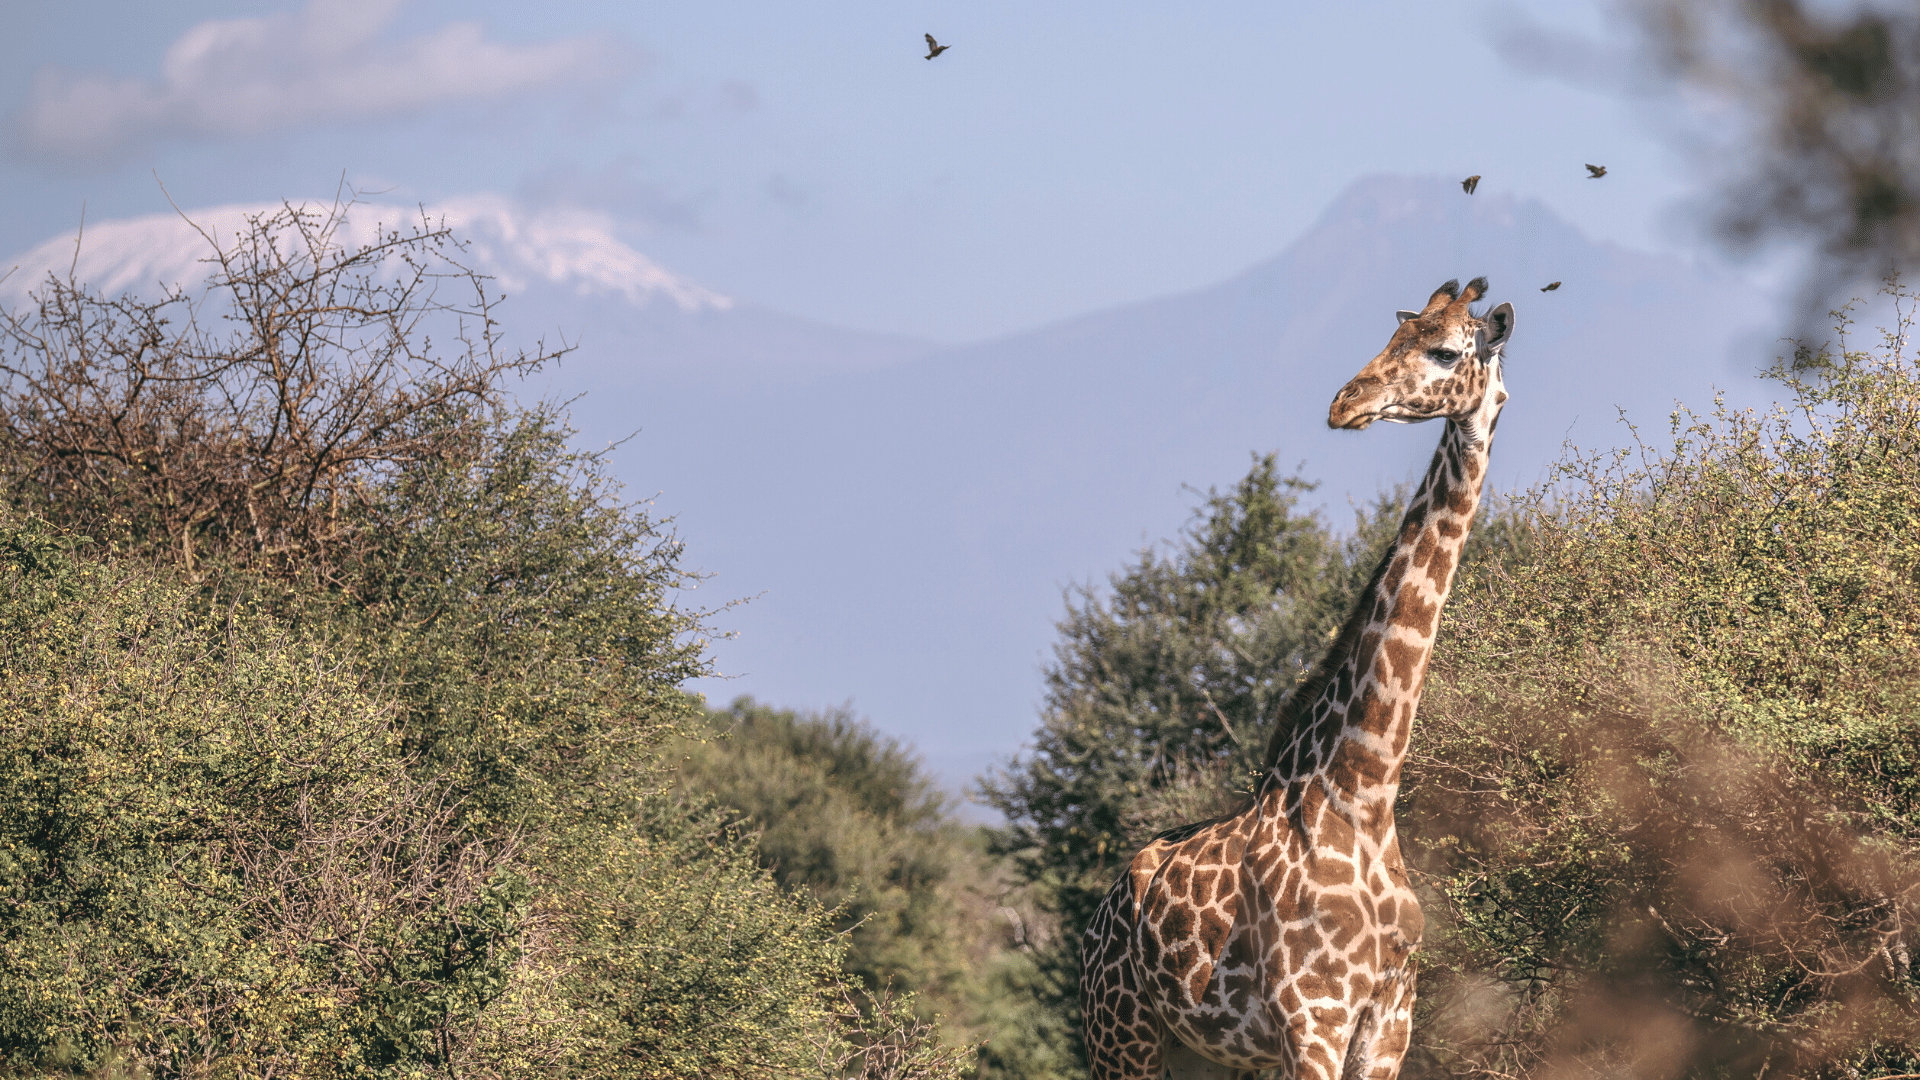 An Adult Giraffe, roaming around in Tsavo West National Park